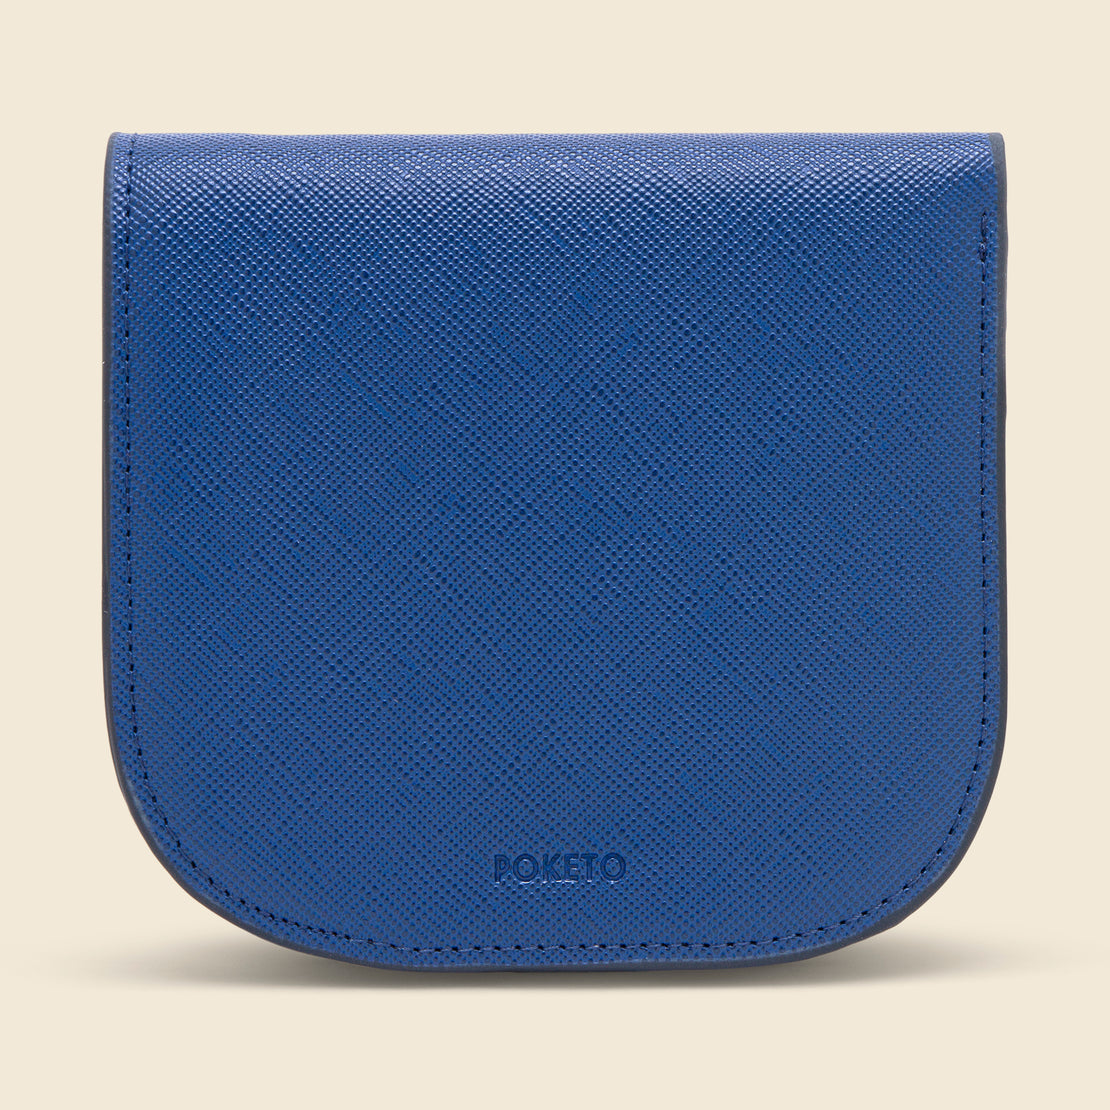 Poketo Dome Wallet - Blue